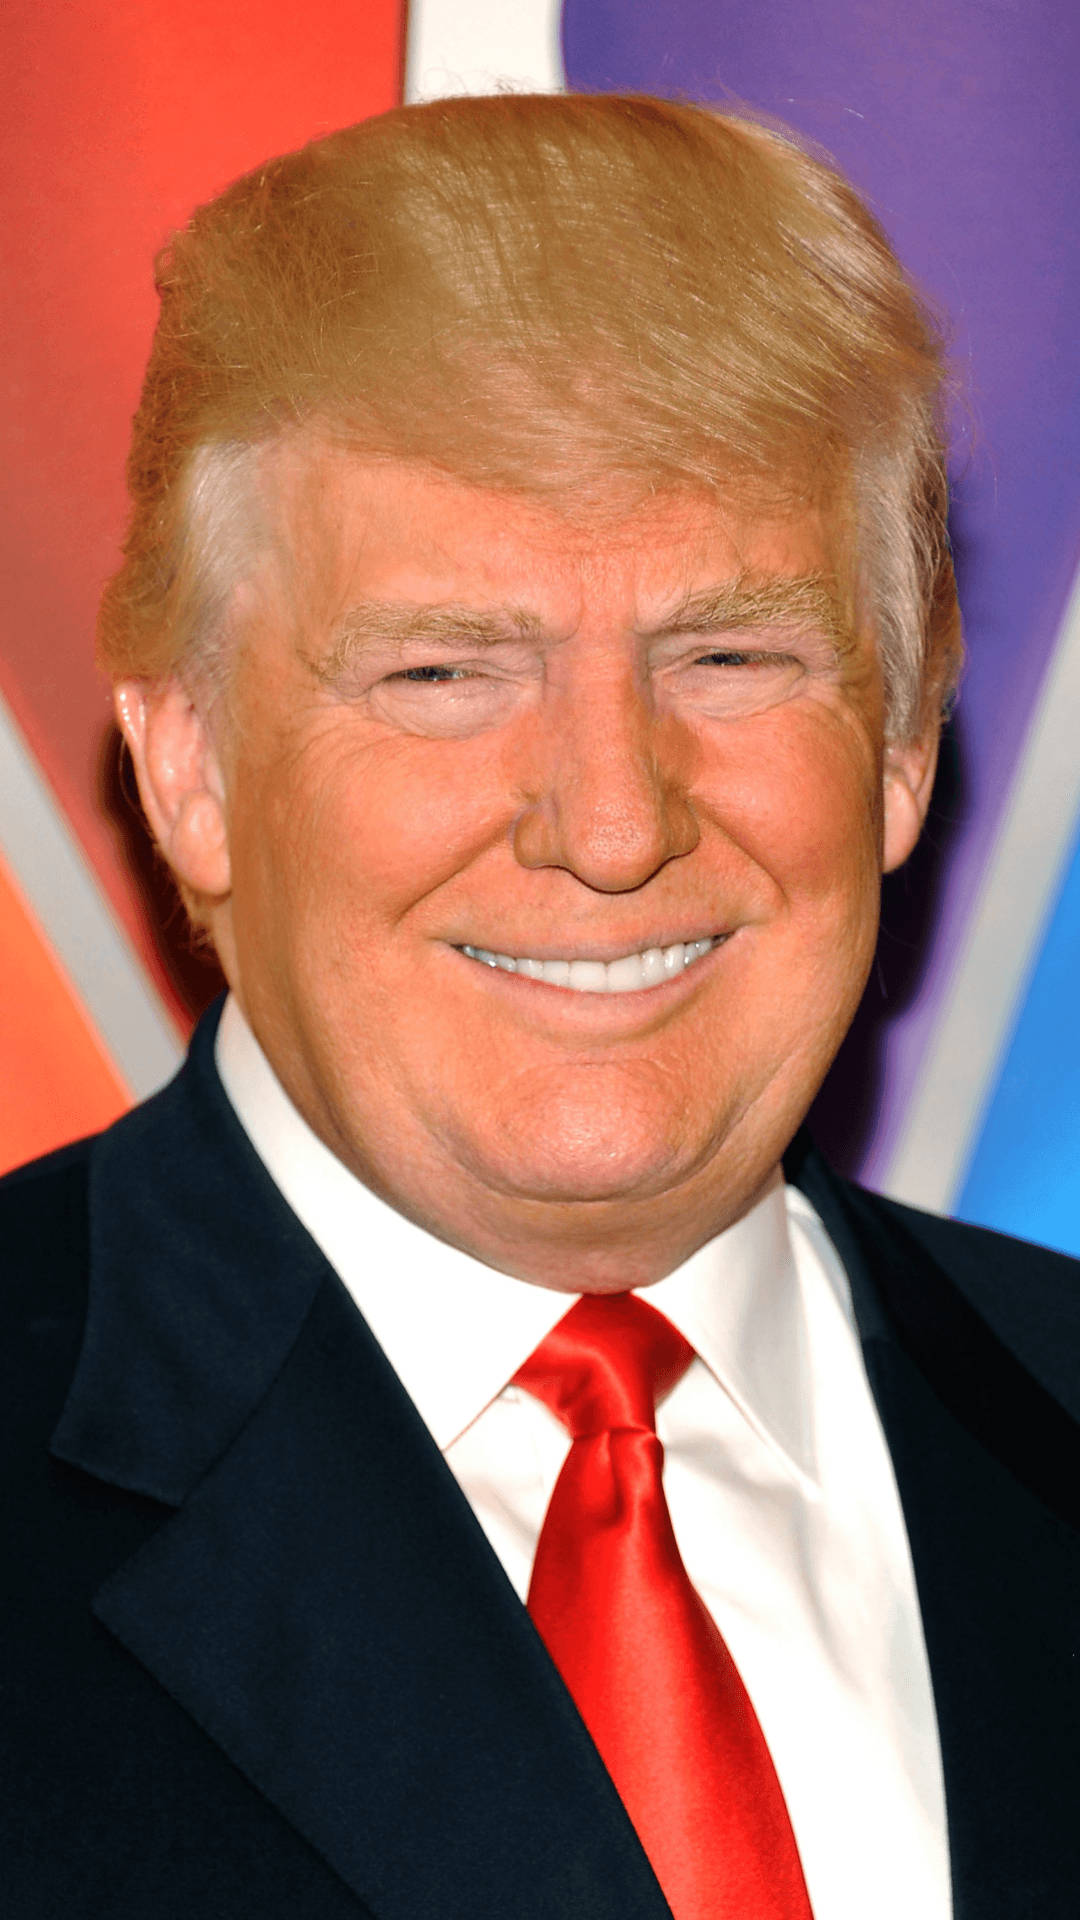 Donald Trump With Orange Hair Wallpaper